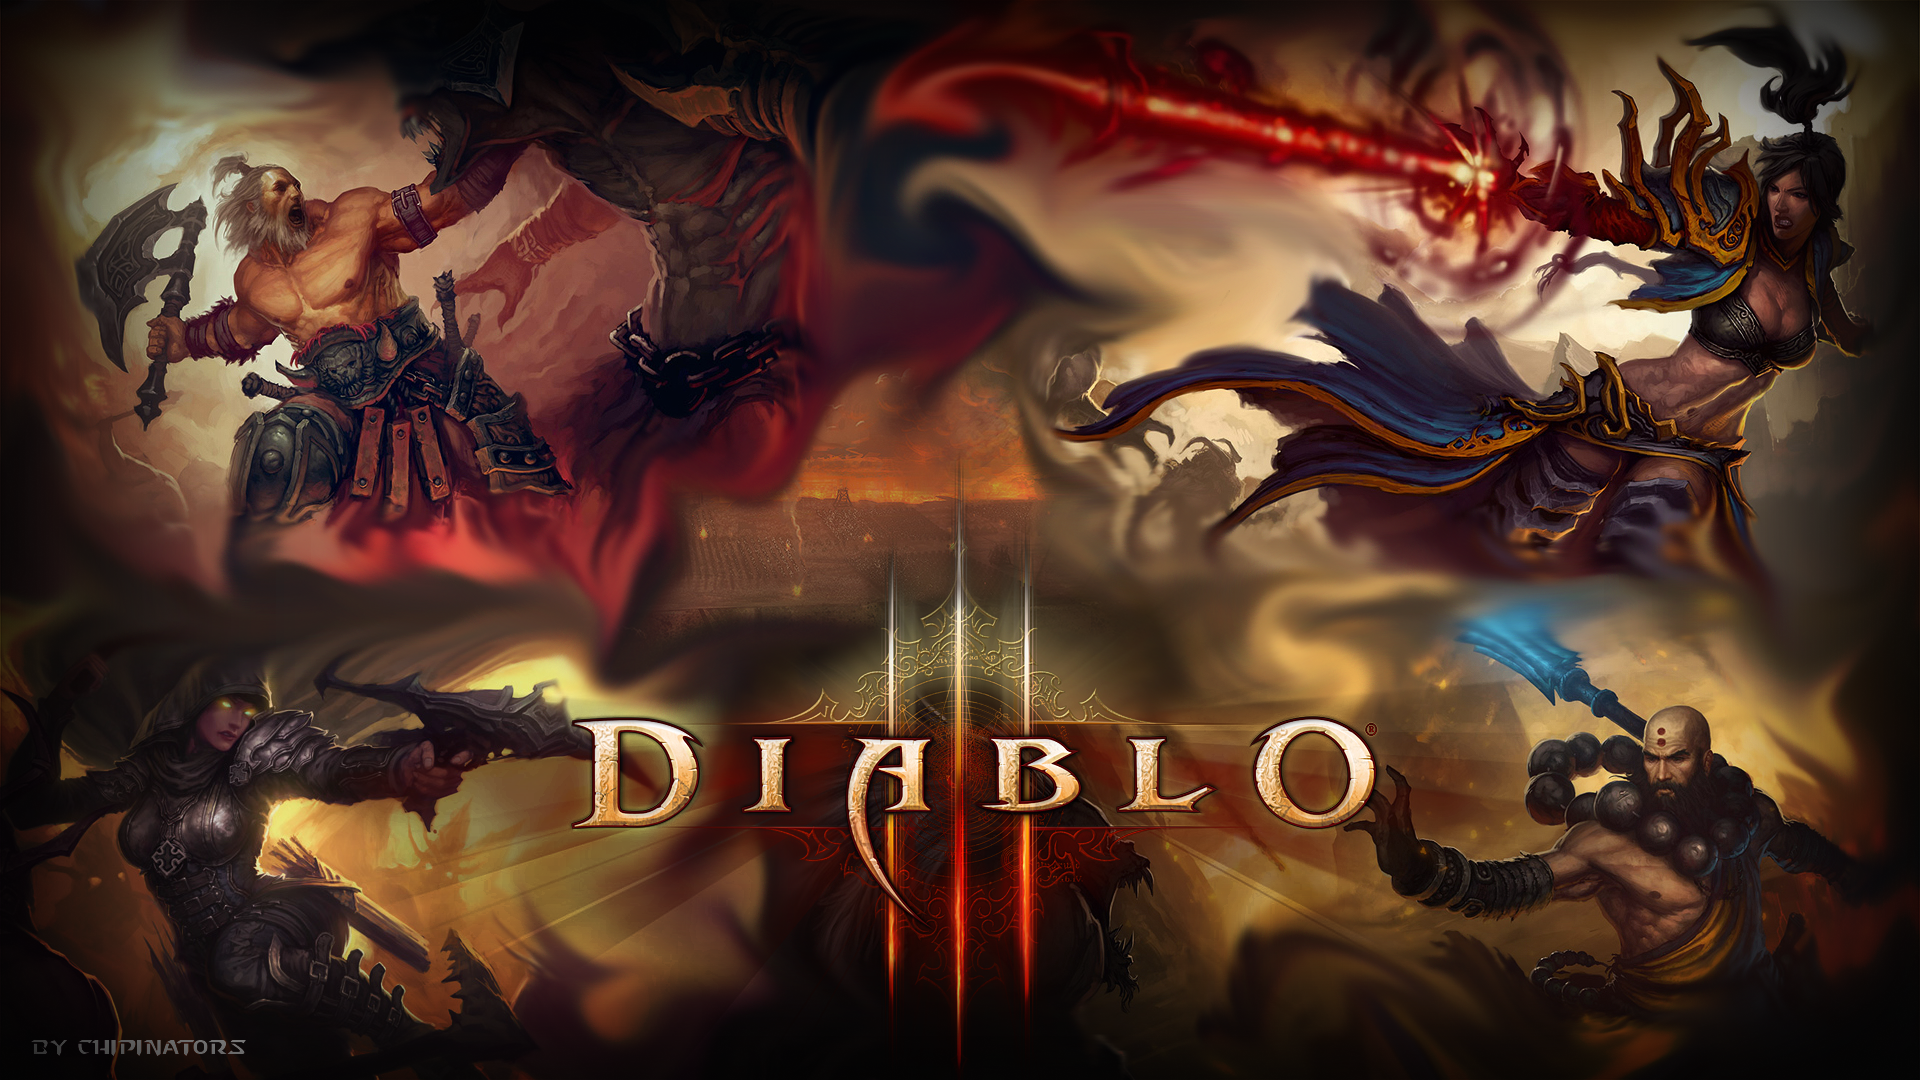 General 1920x1080 Diablo III video games video game art Blizzard Entertainment PC gaming